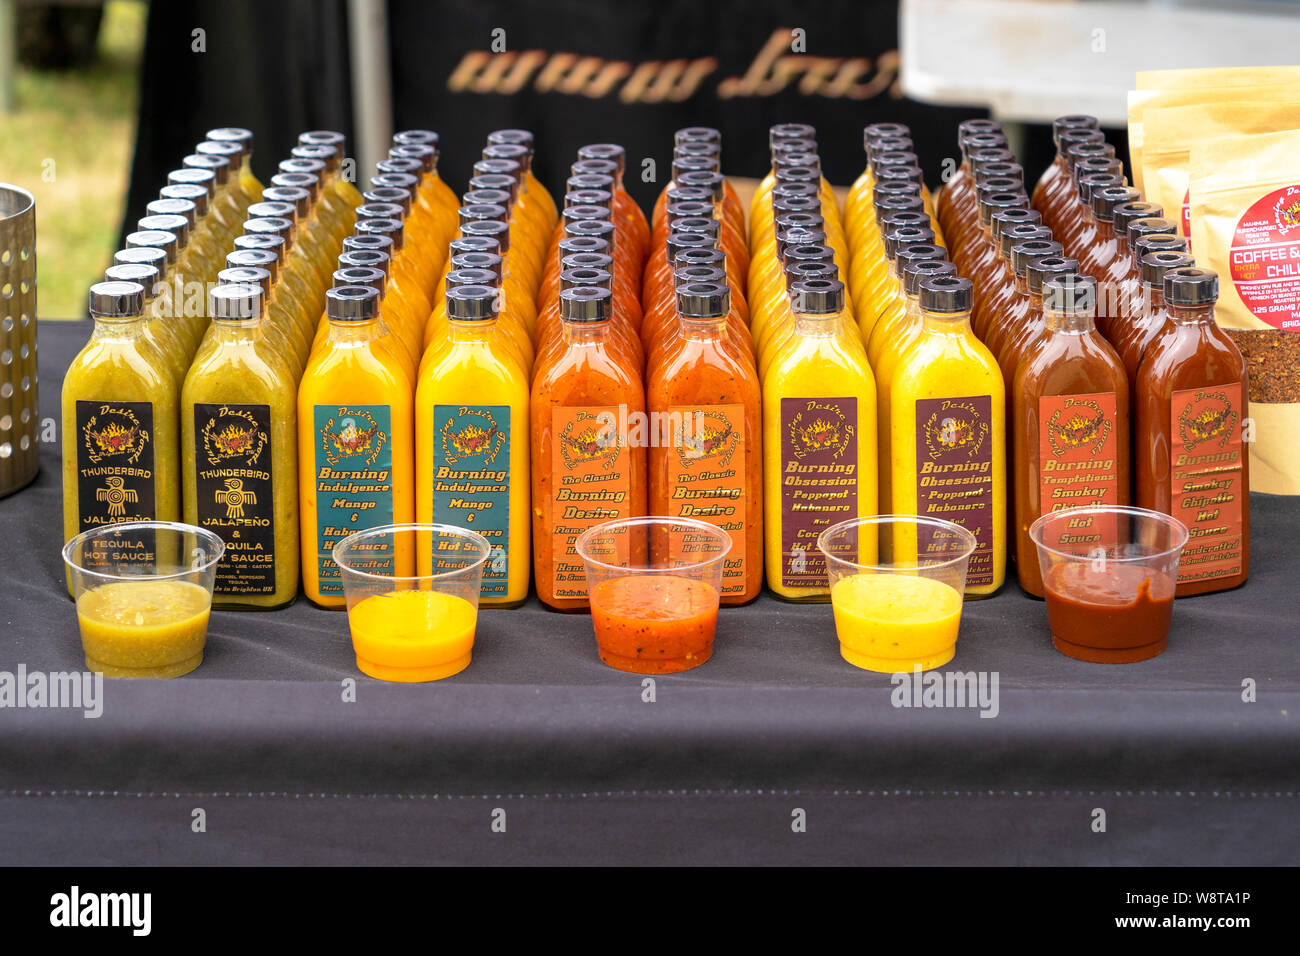 Bottles of Chilli sauce for sale at the Dorset Chilli festival Stock Photo